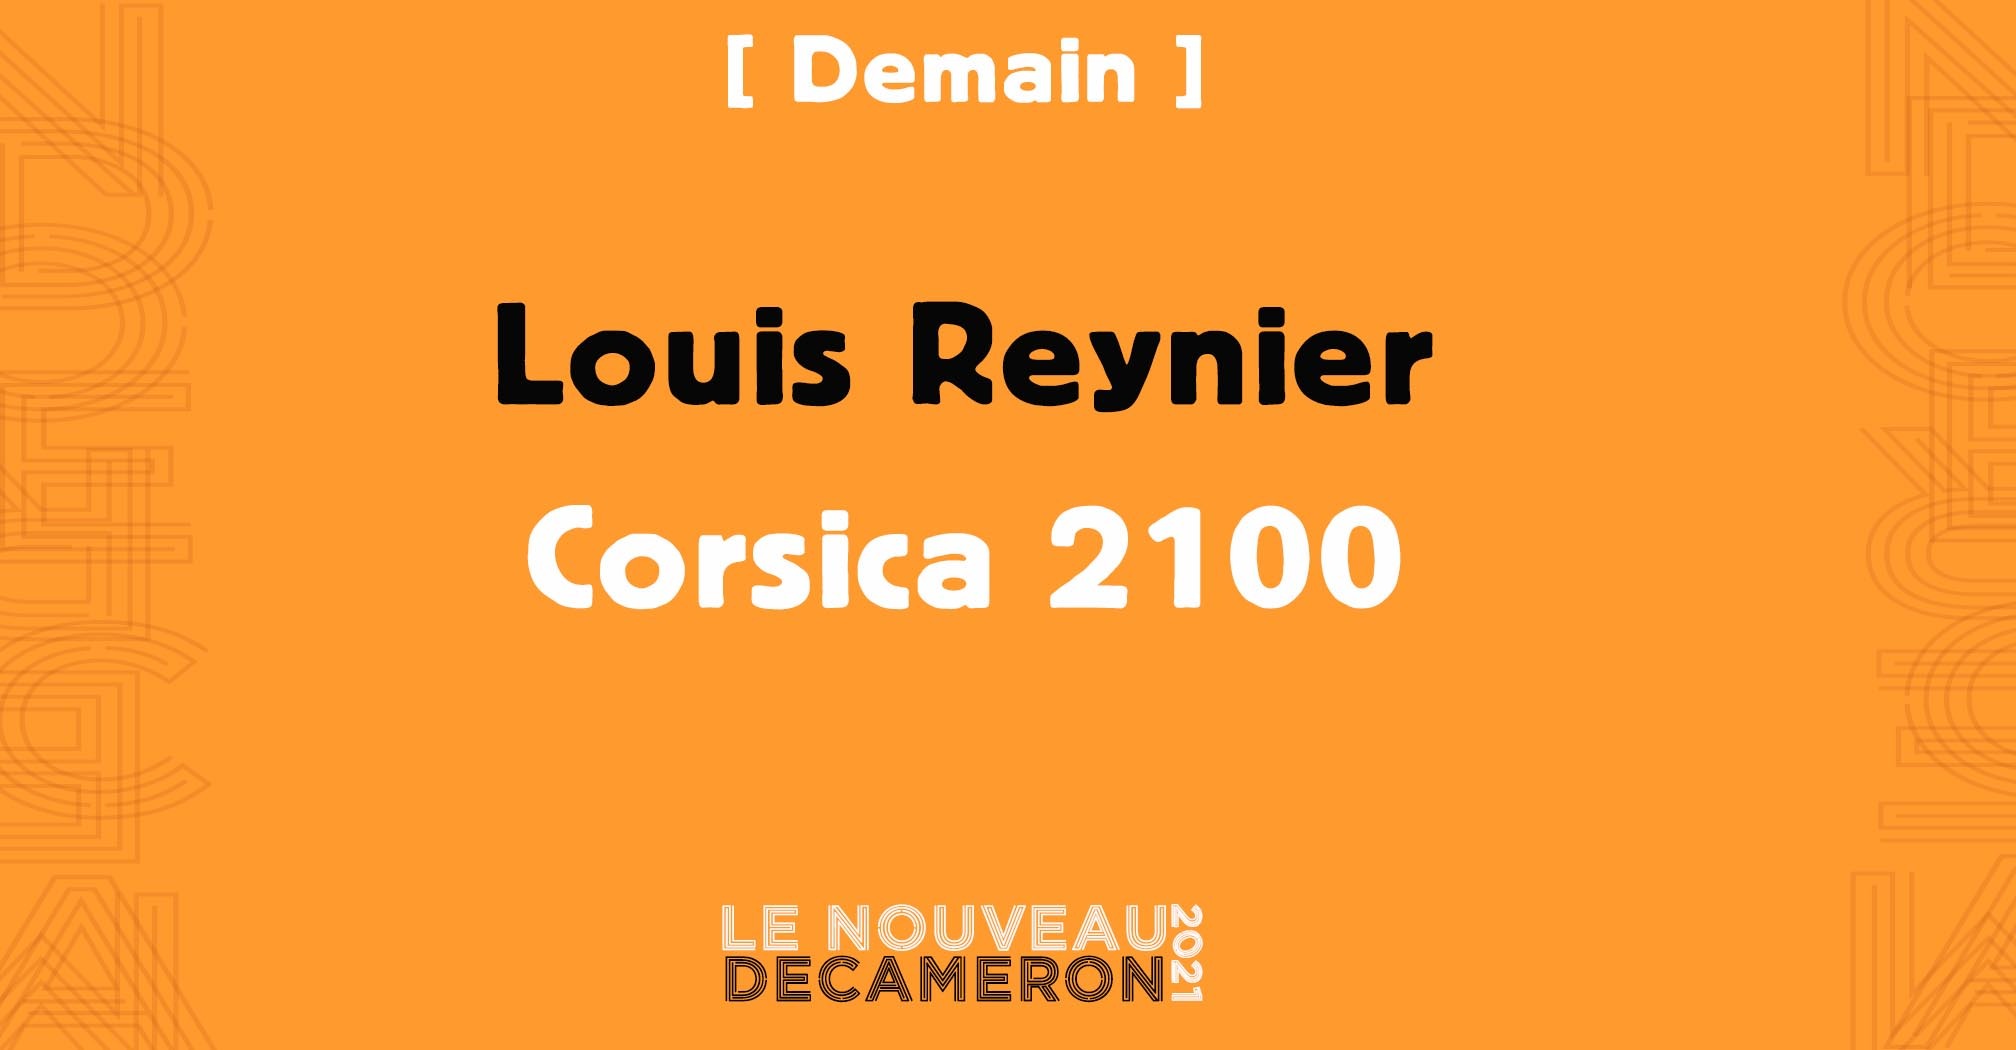 Louis Reynier - Corsica 2100